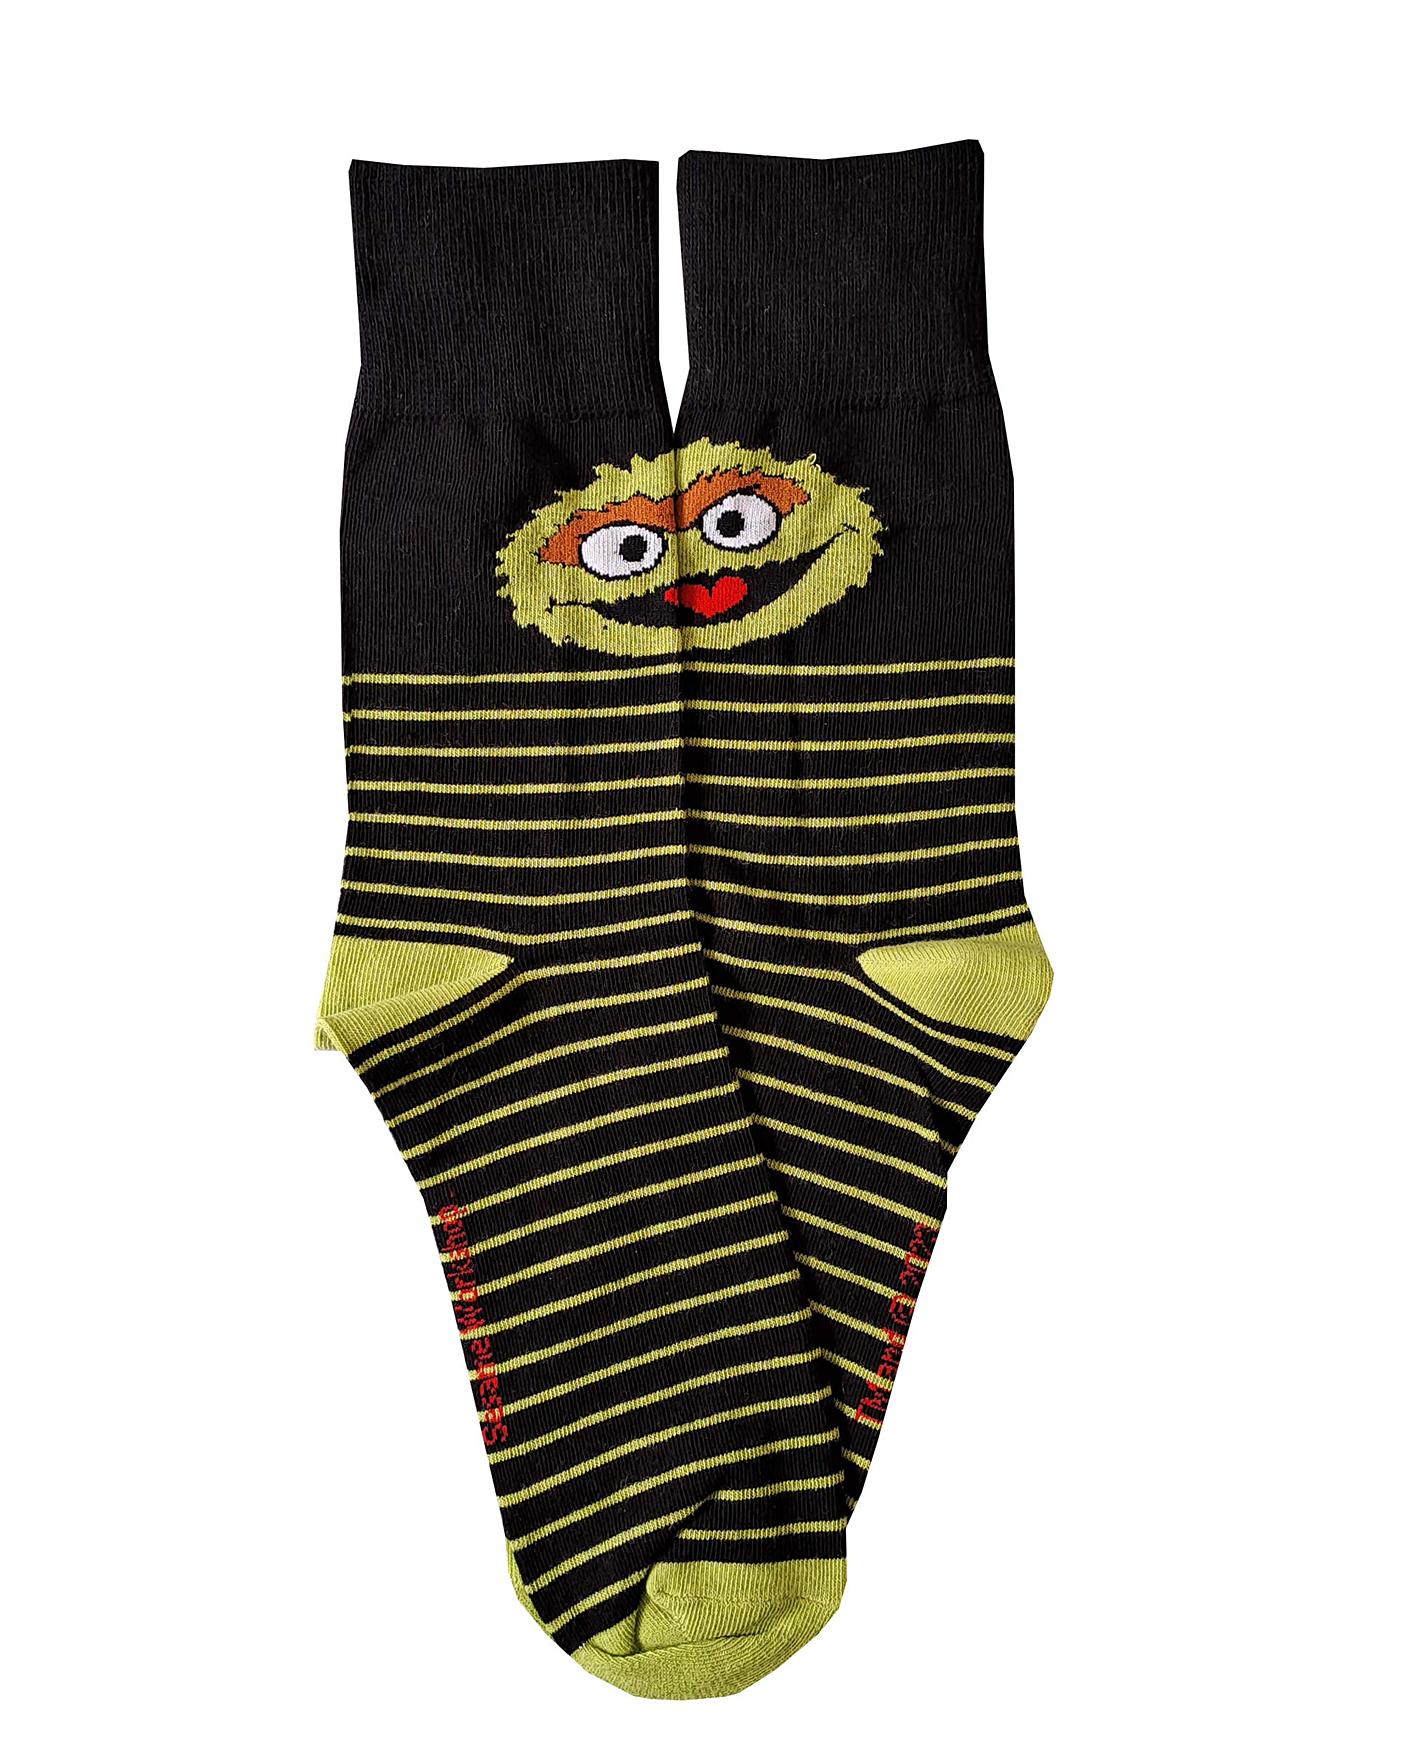 Shop for Sesame Street, Underwear & Socks, Gifts for Him